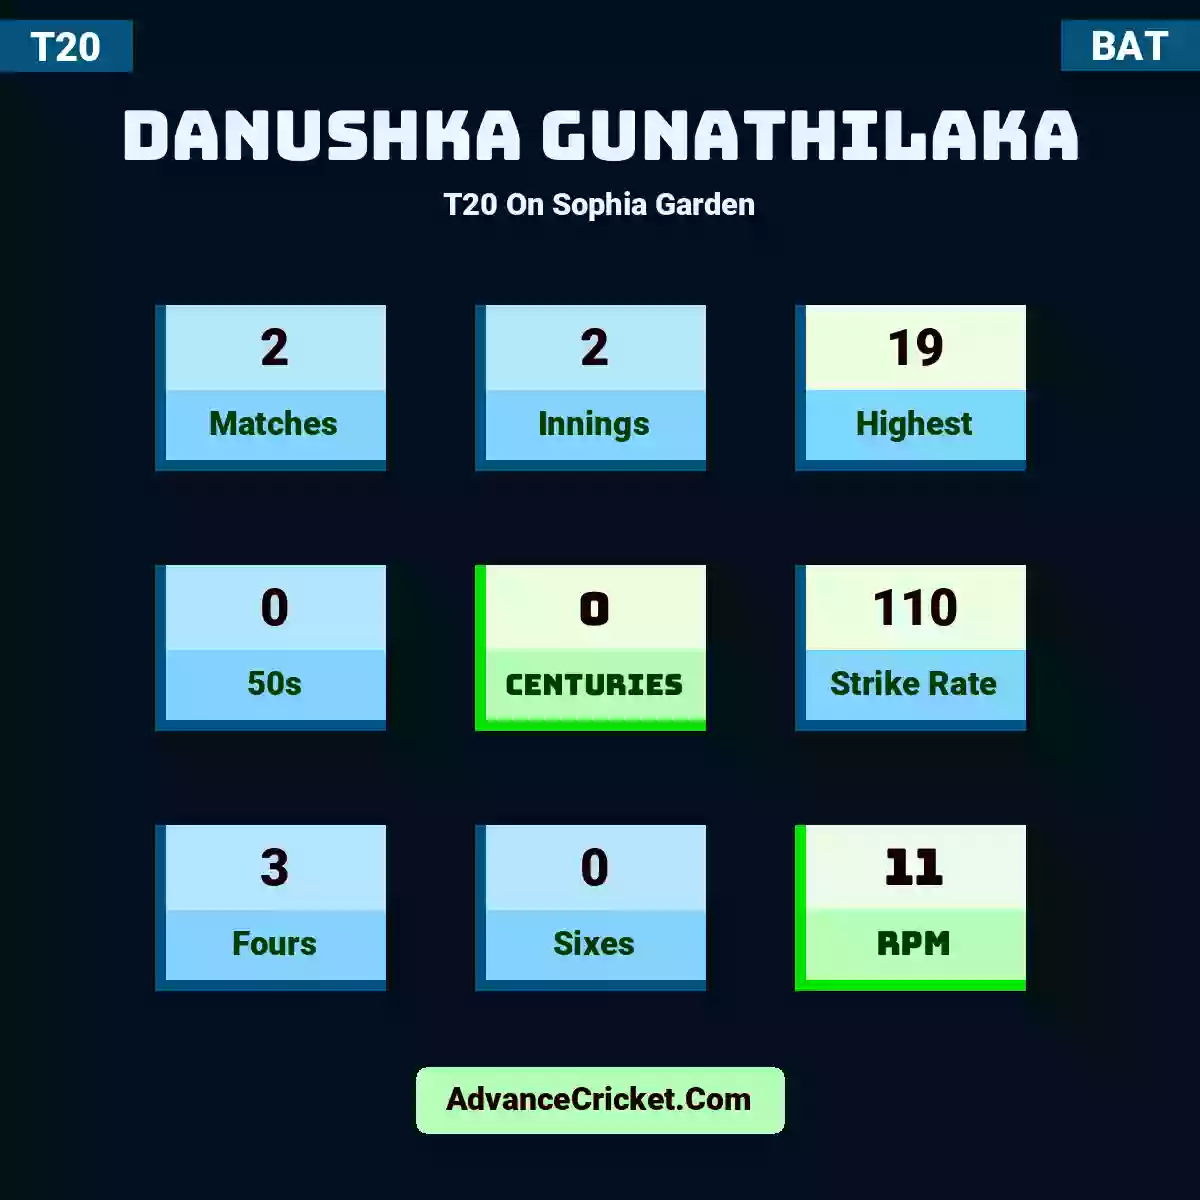 Danushka Gunathilaka T20  On Sophia Garden, Danushka Gunathilaka played 2 matches, scored 19 runs as highest, 0 half-centuries, and 0 centuries, with a strike rate of 110. D.Gunathilaka hit 3 fours and 0 sixes, with an RPM of 11.